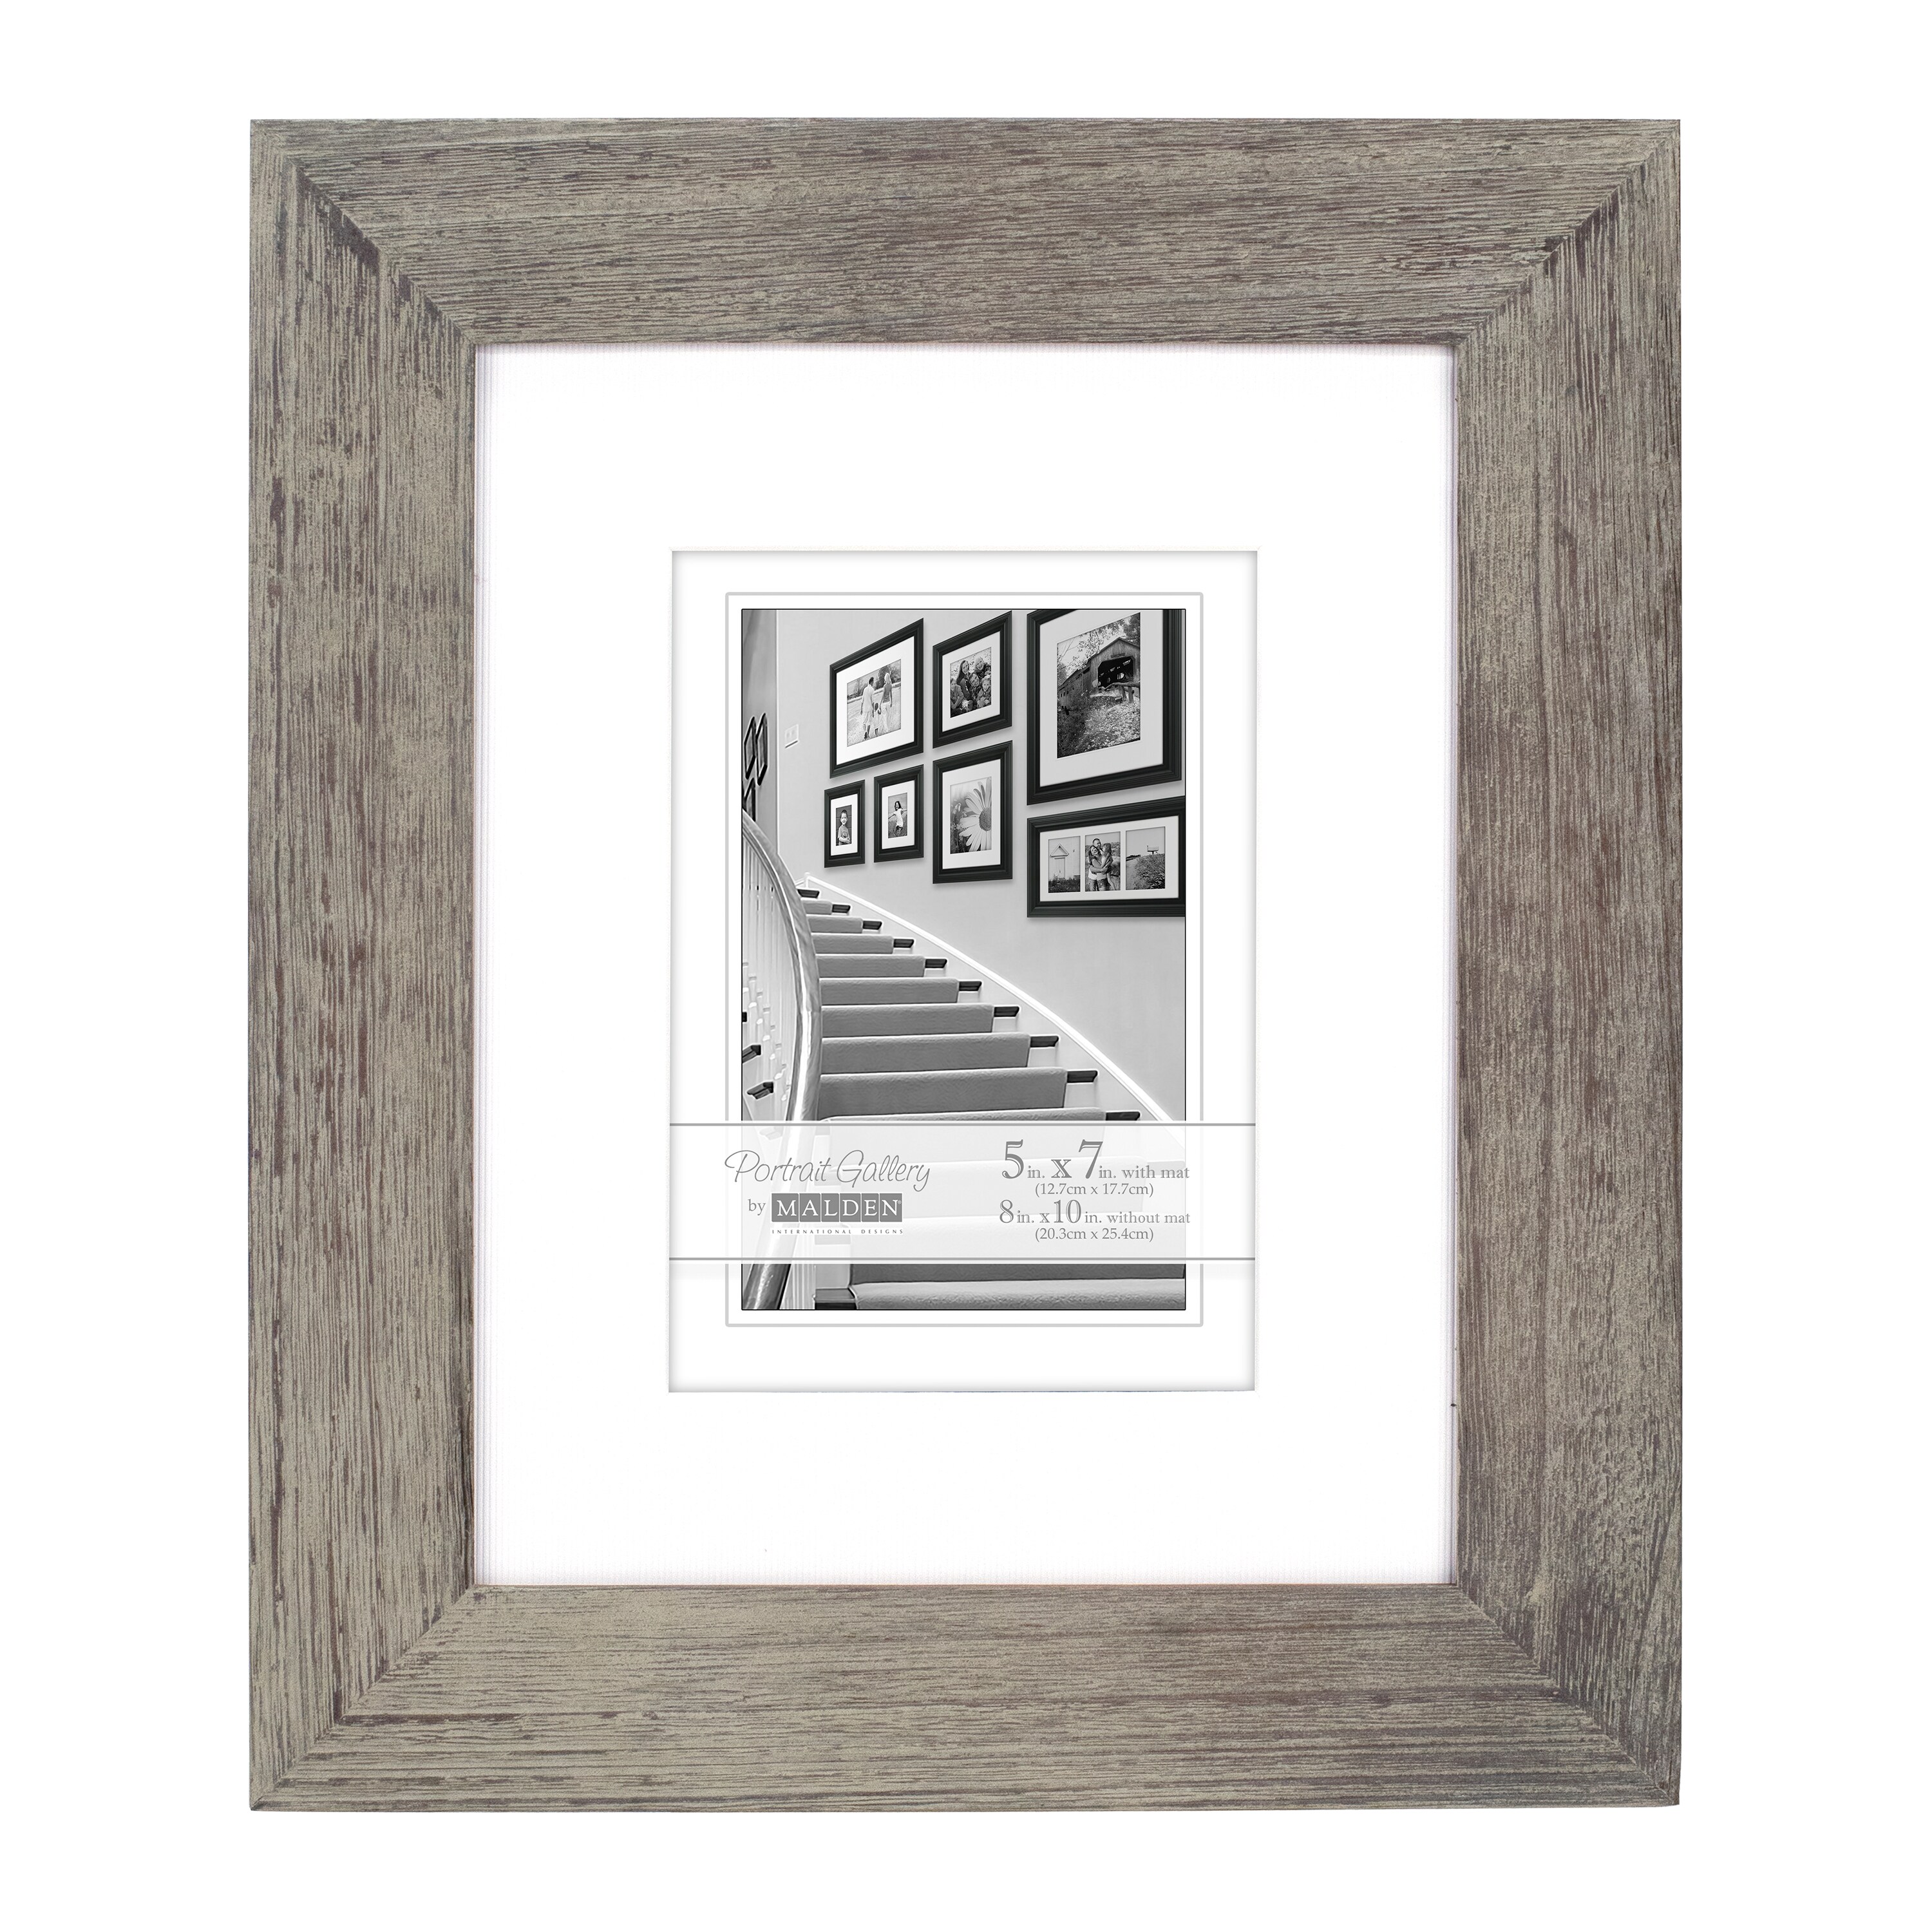 Blue 672-57 Malden International Designs Linear Classic Wood Picture Frame 5x7